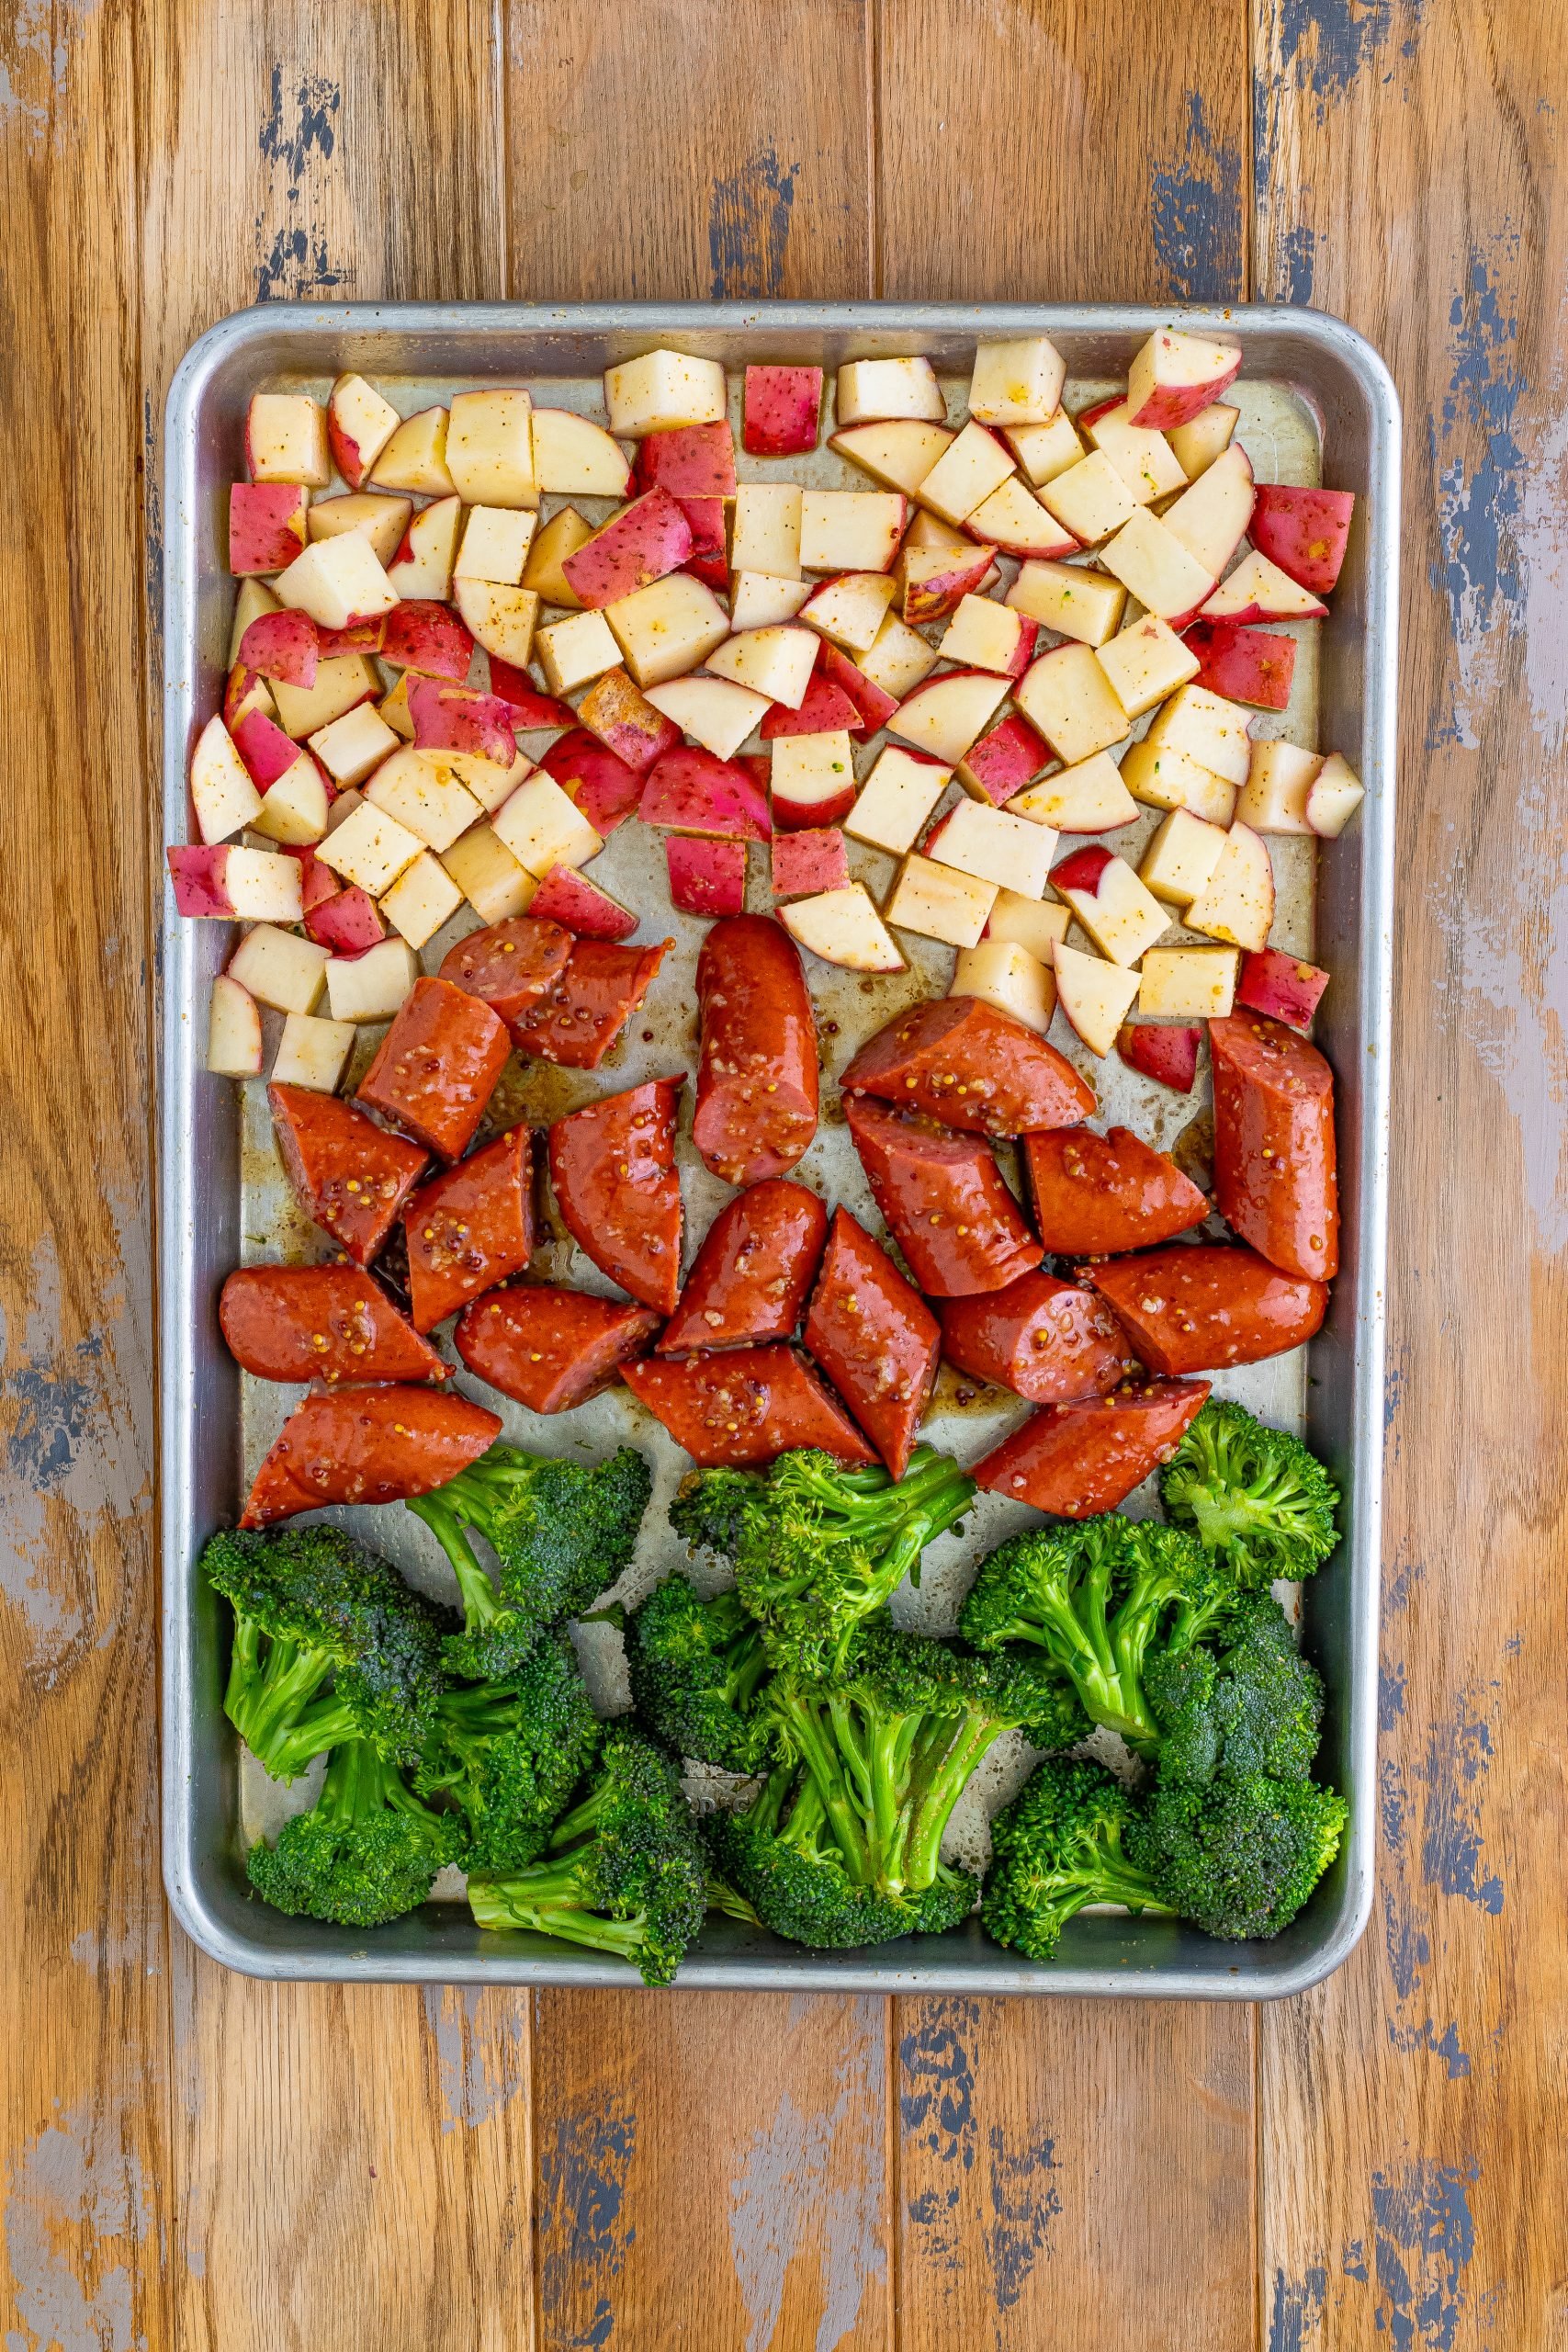 Kielbasa coated with sauce, broccolini, and potatoes on a sheet pan.